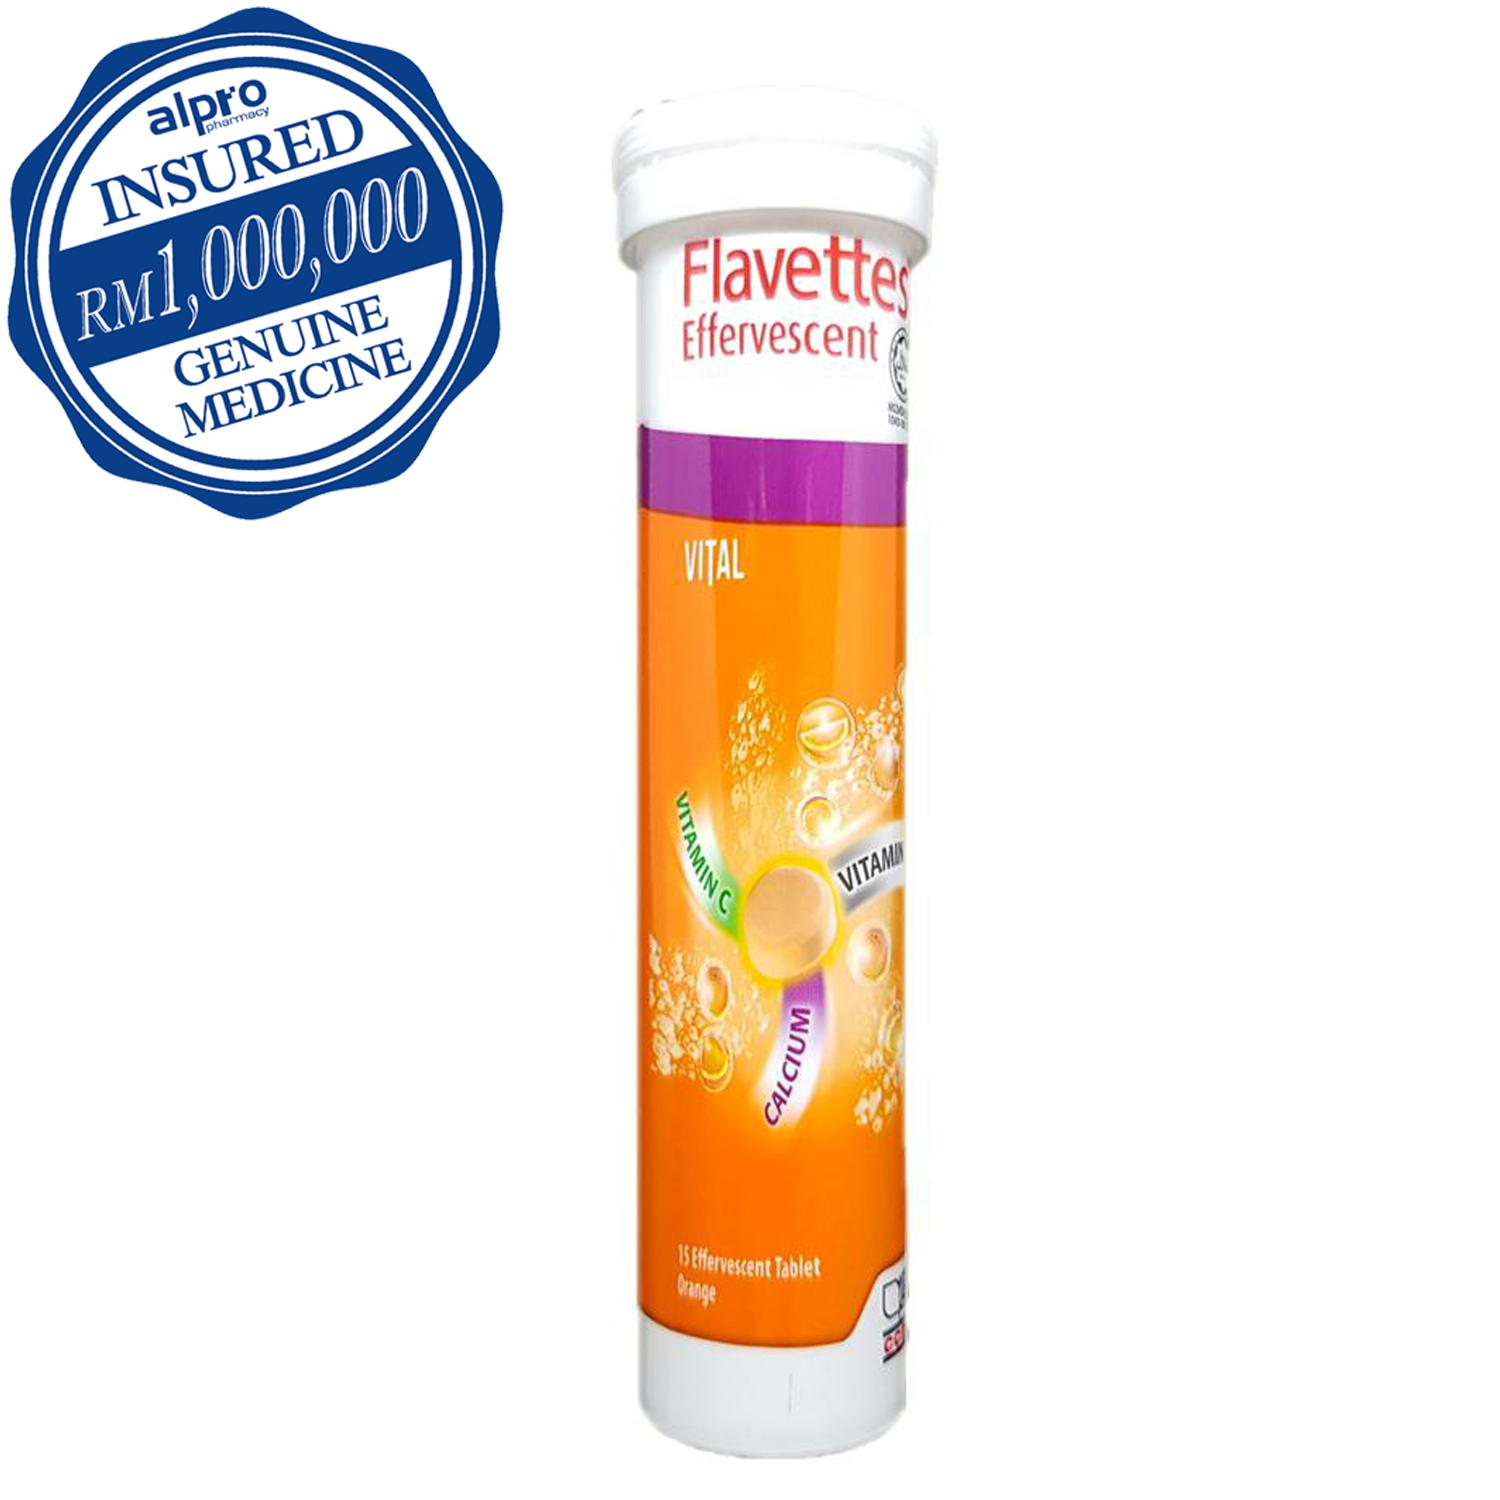 Flavettes Vitamin C Glow Benefits